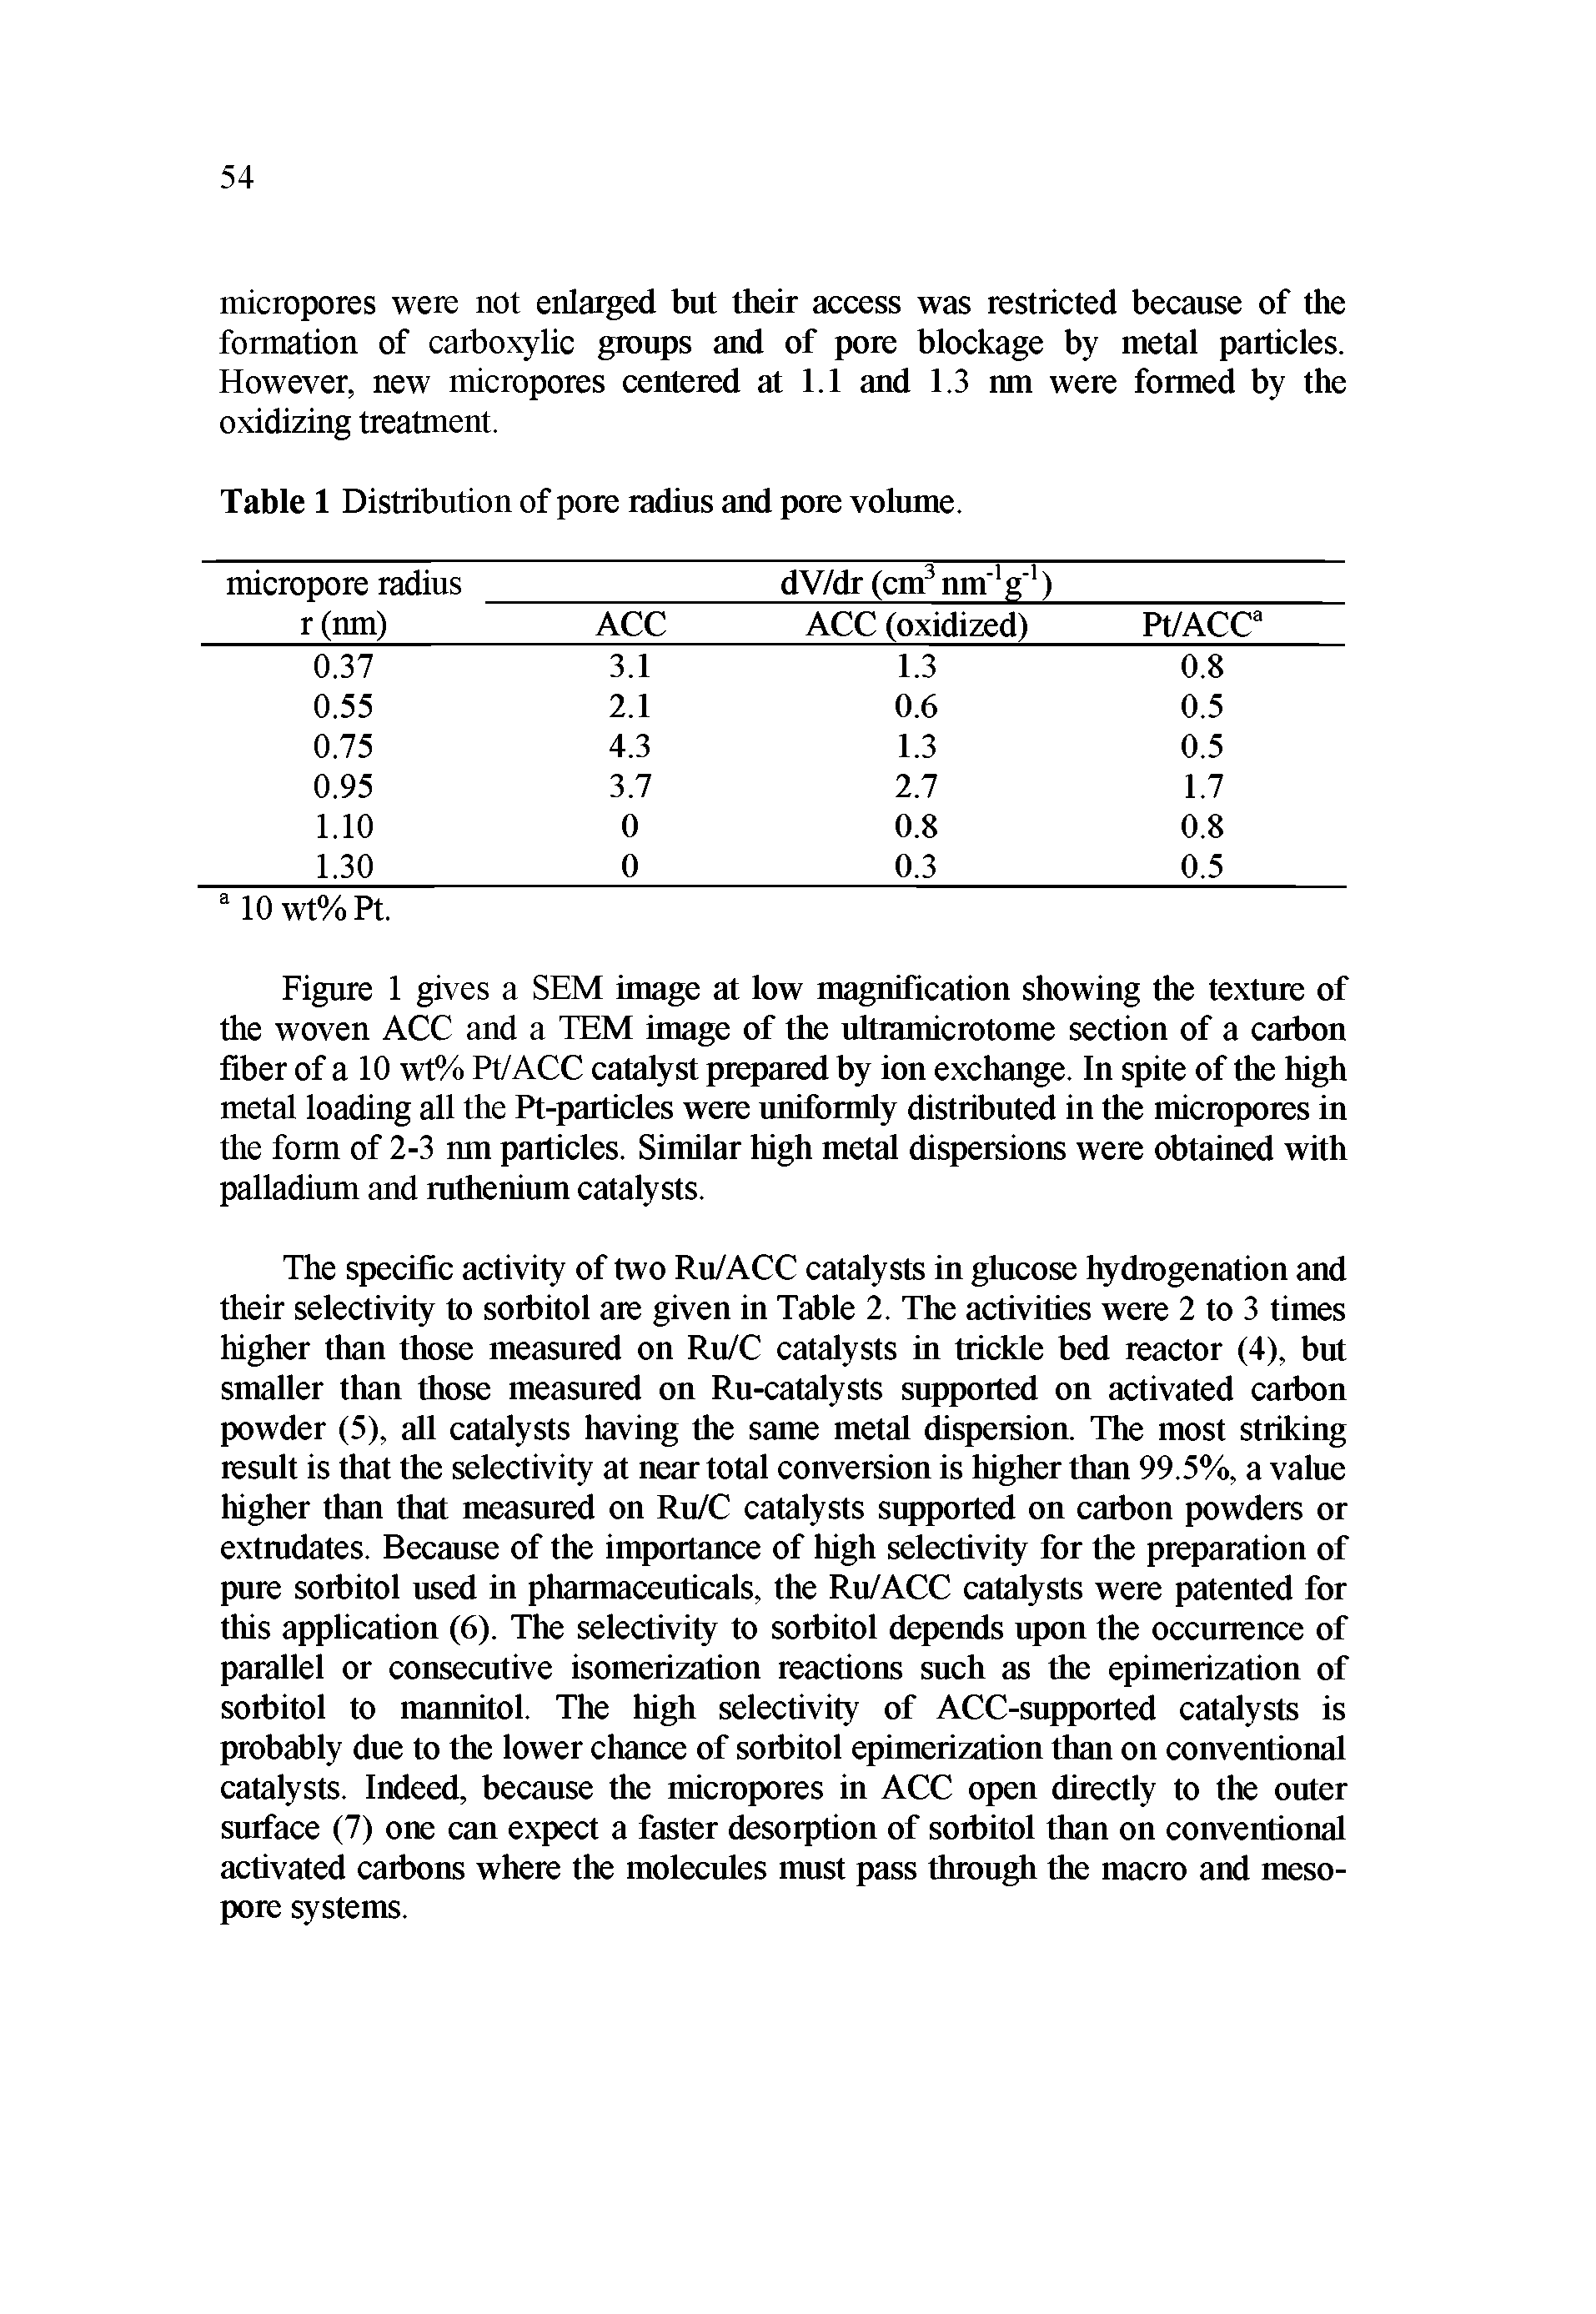 Table 1 Distribution of pore radius and pore volume.